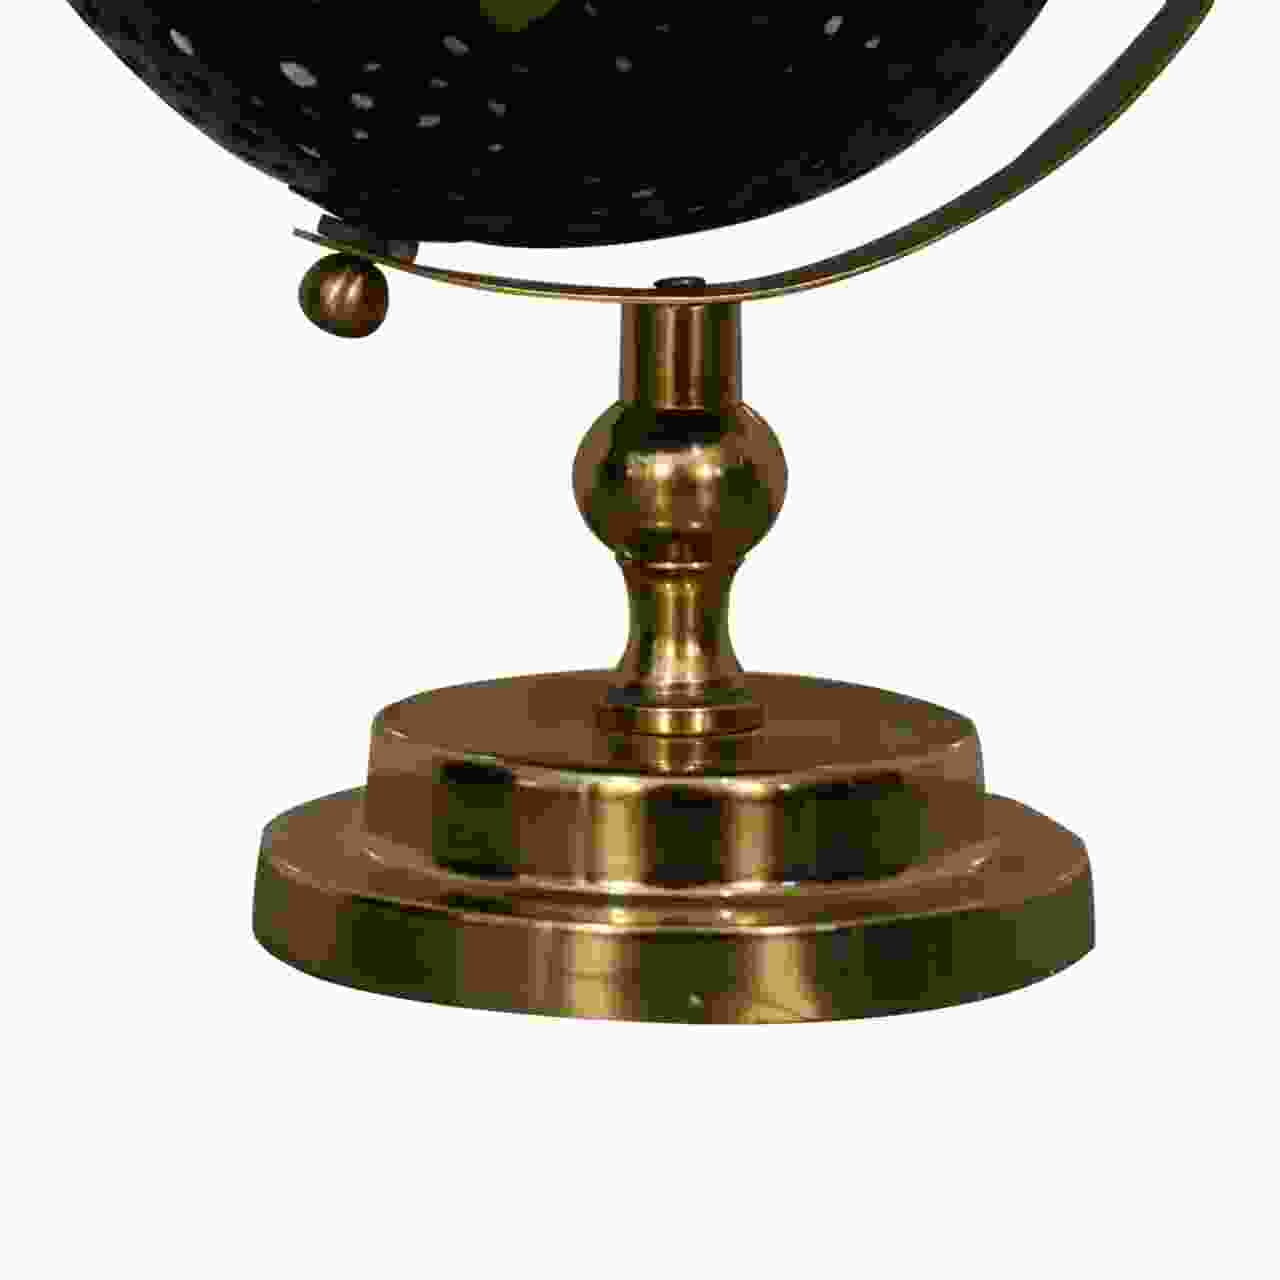 Globe noir avec cadre doré